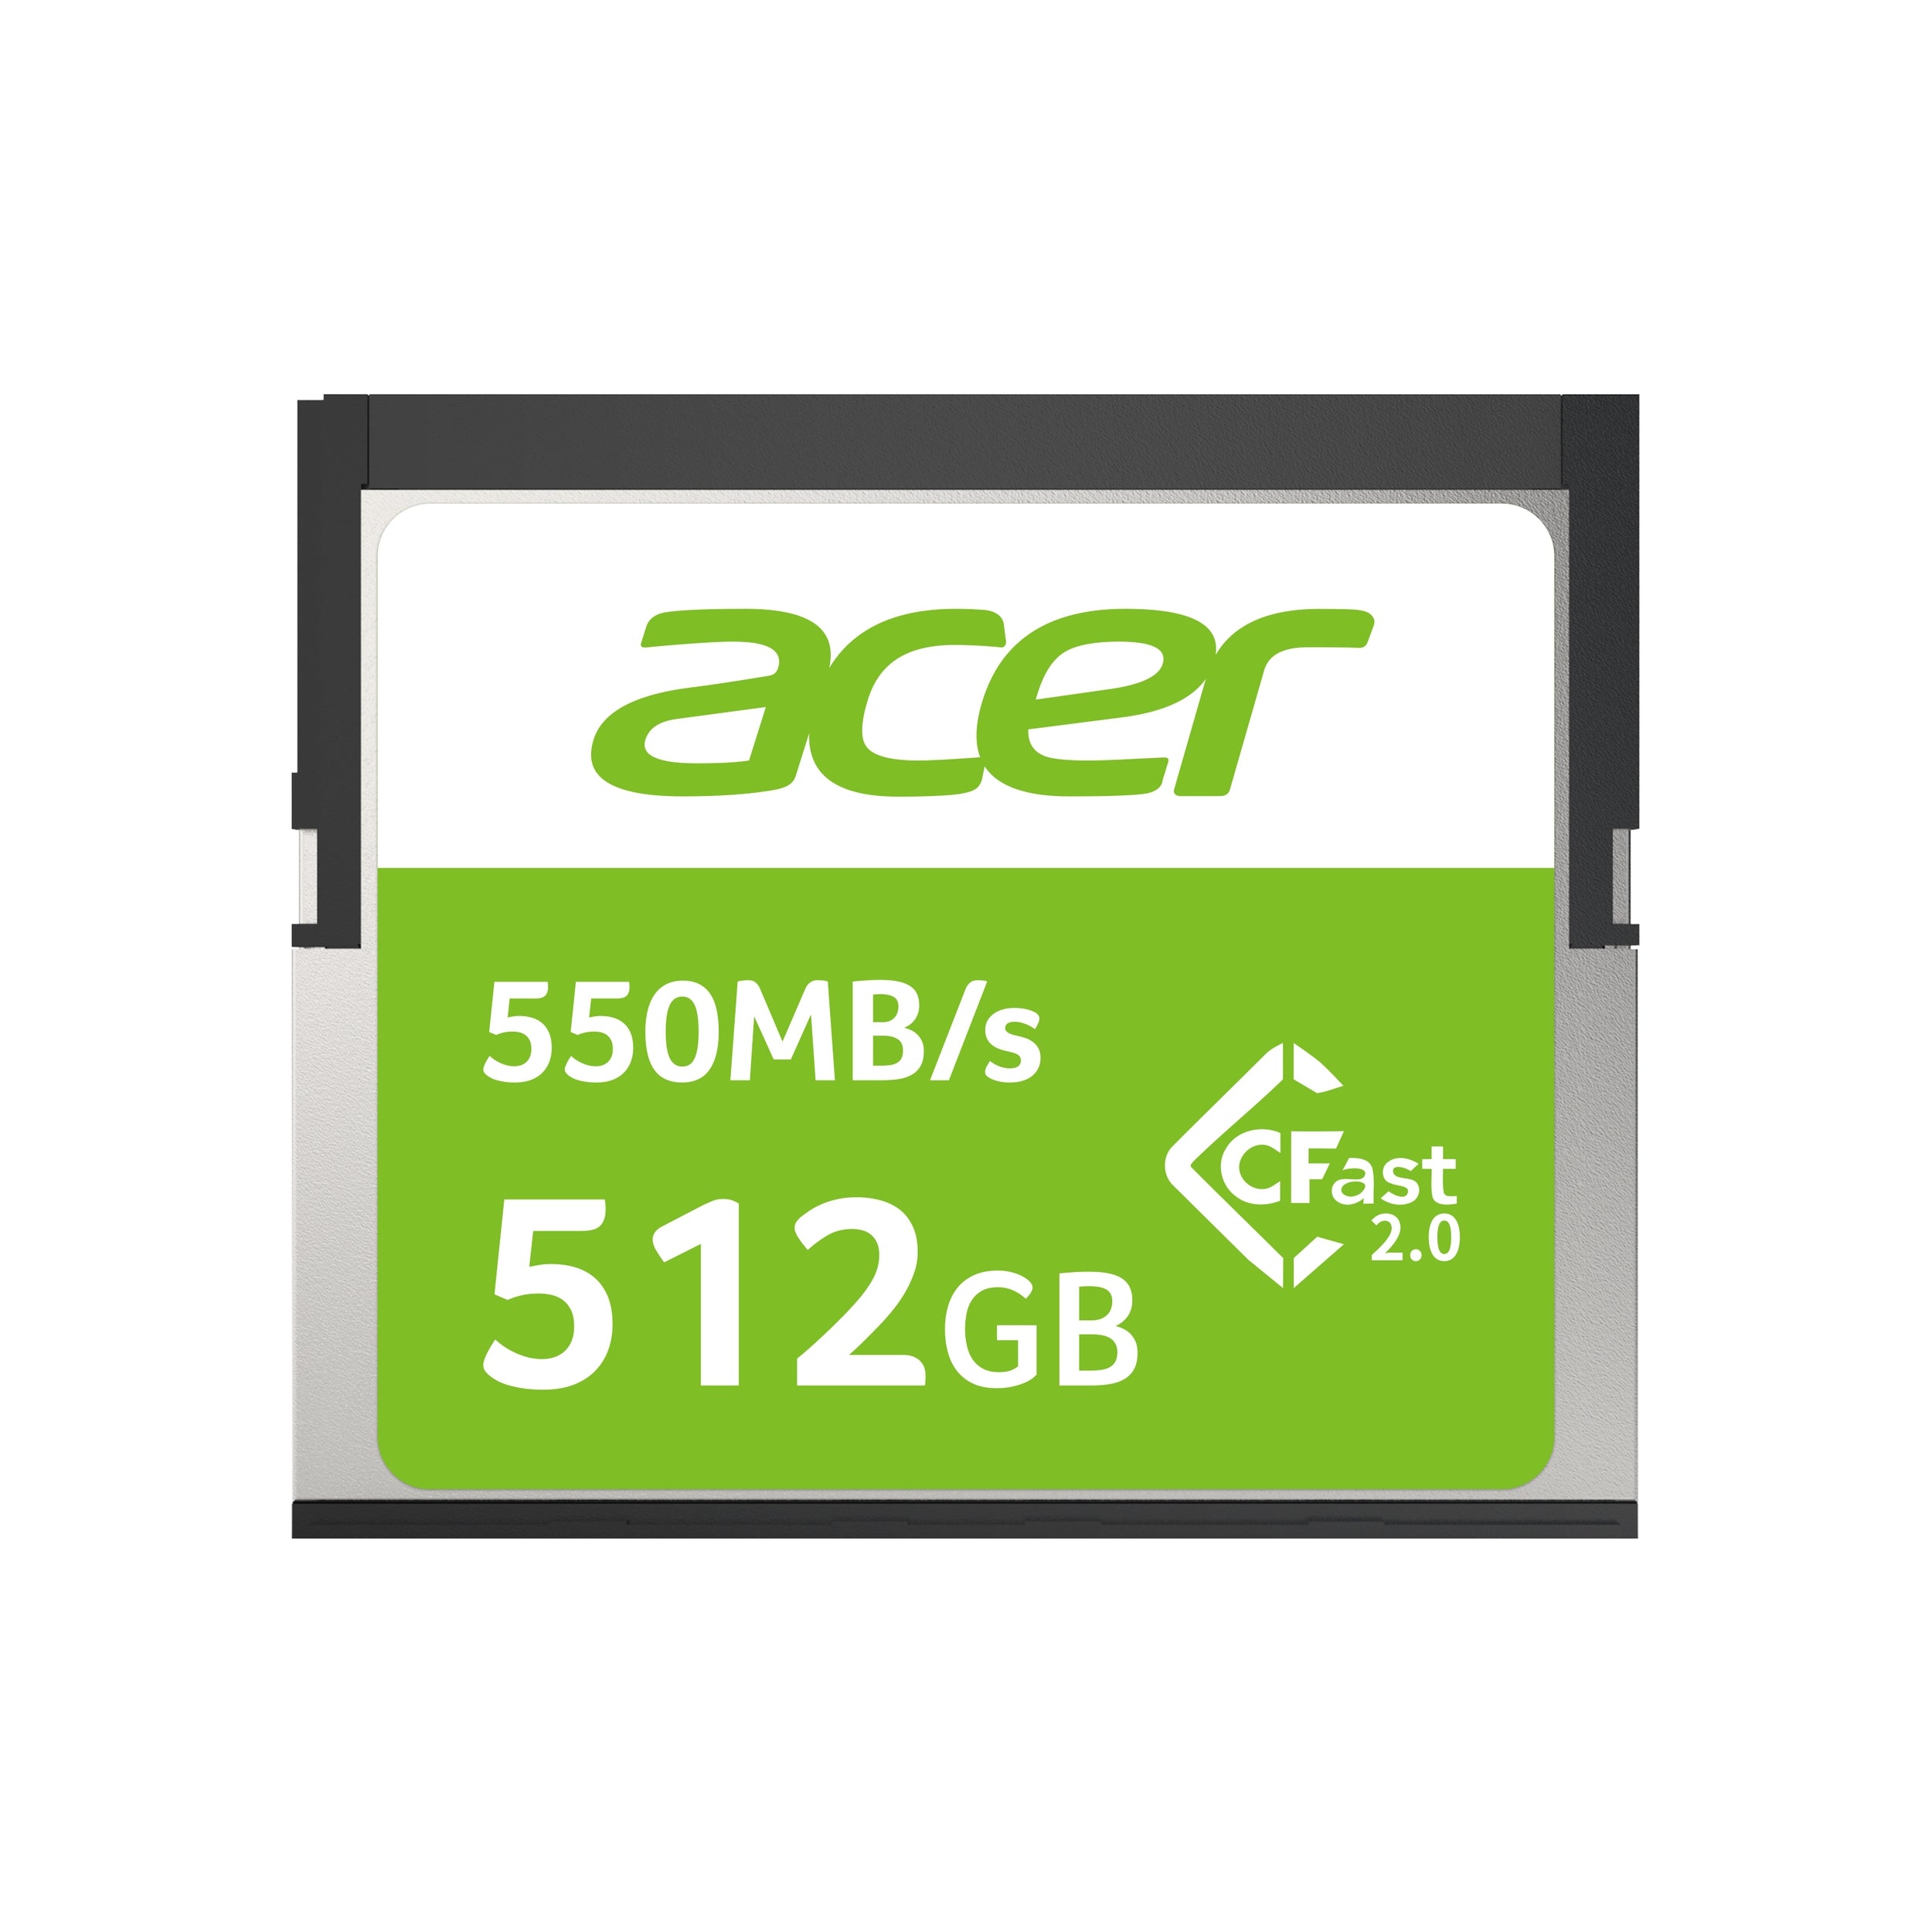 Memoria Acer Compact Flash 2.0 Cf100 512Gb 550 Mb/S (Bl.9Bwwa.316)